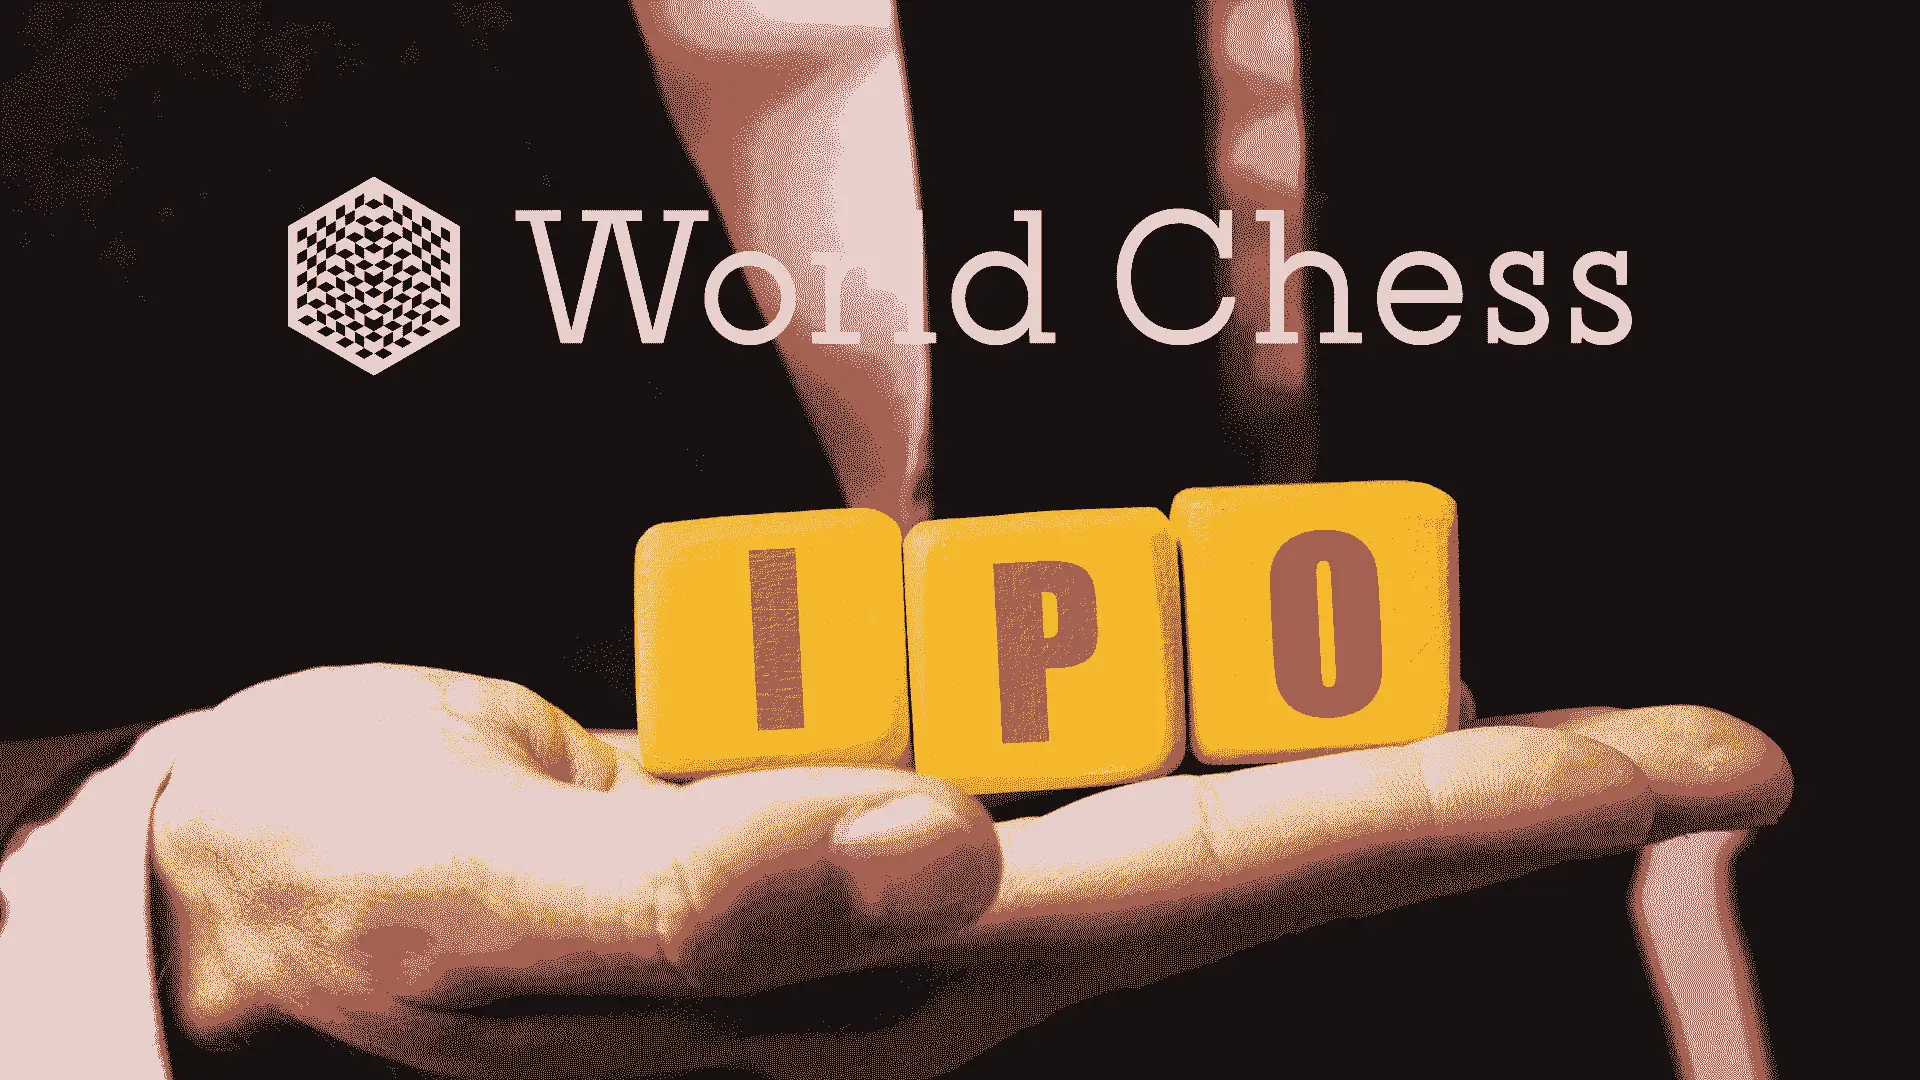 World Chess to Host Hybrid IPO through Securitize Algorand